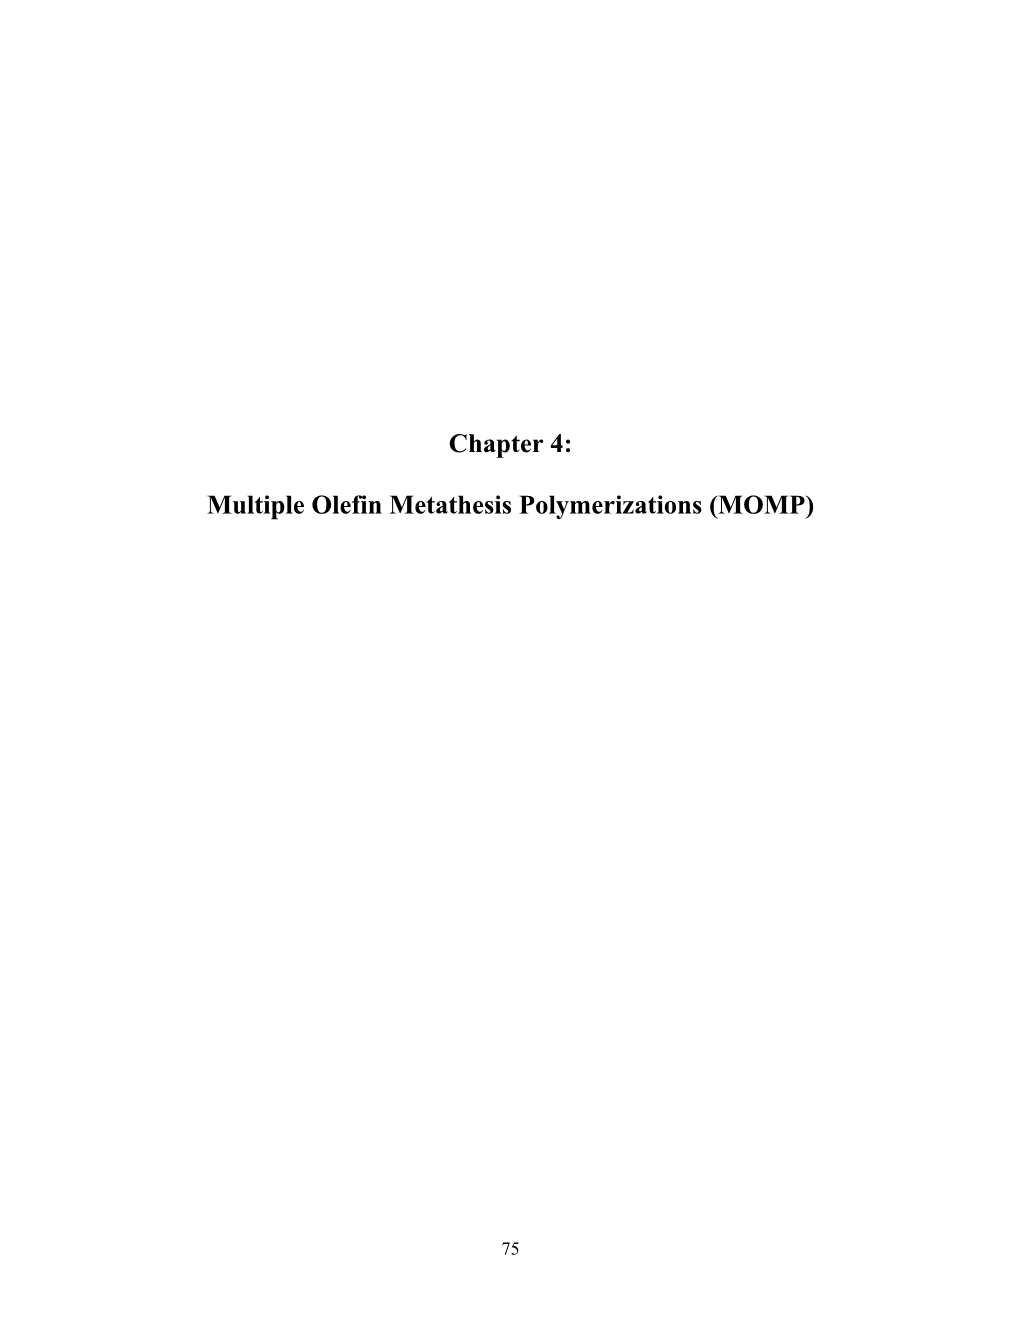 Chapter 4: Multiple Olefin Metathesis Polymerizations (MOMP)